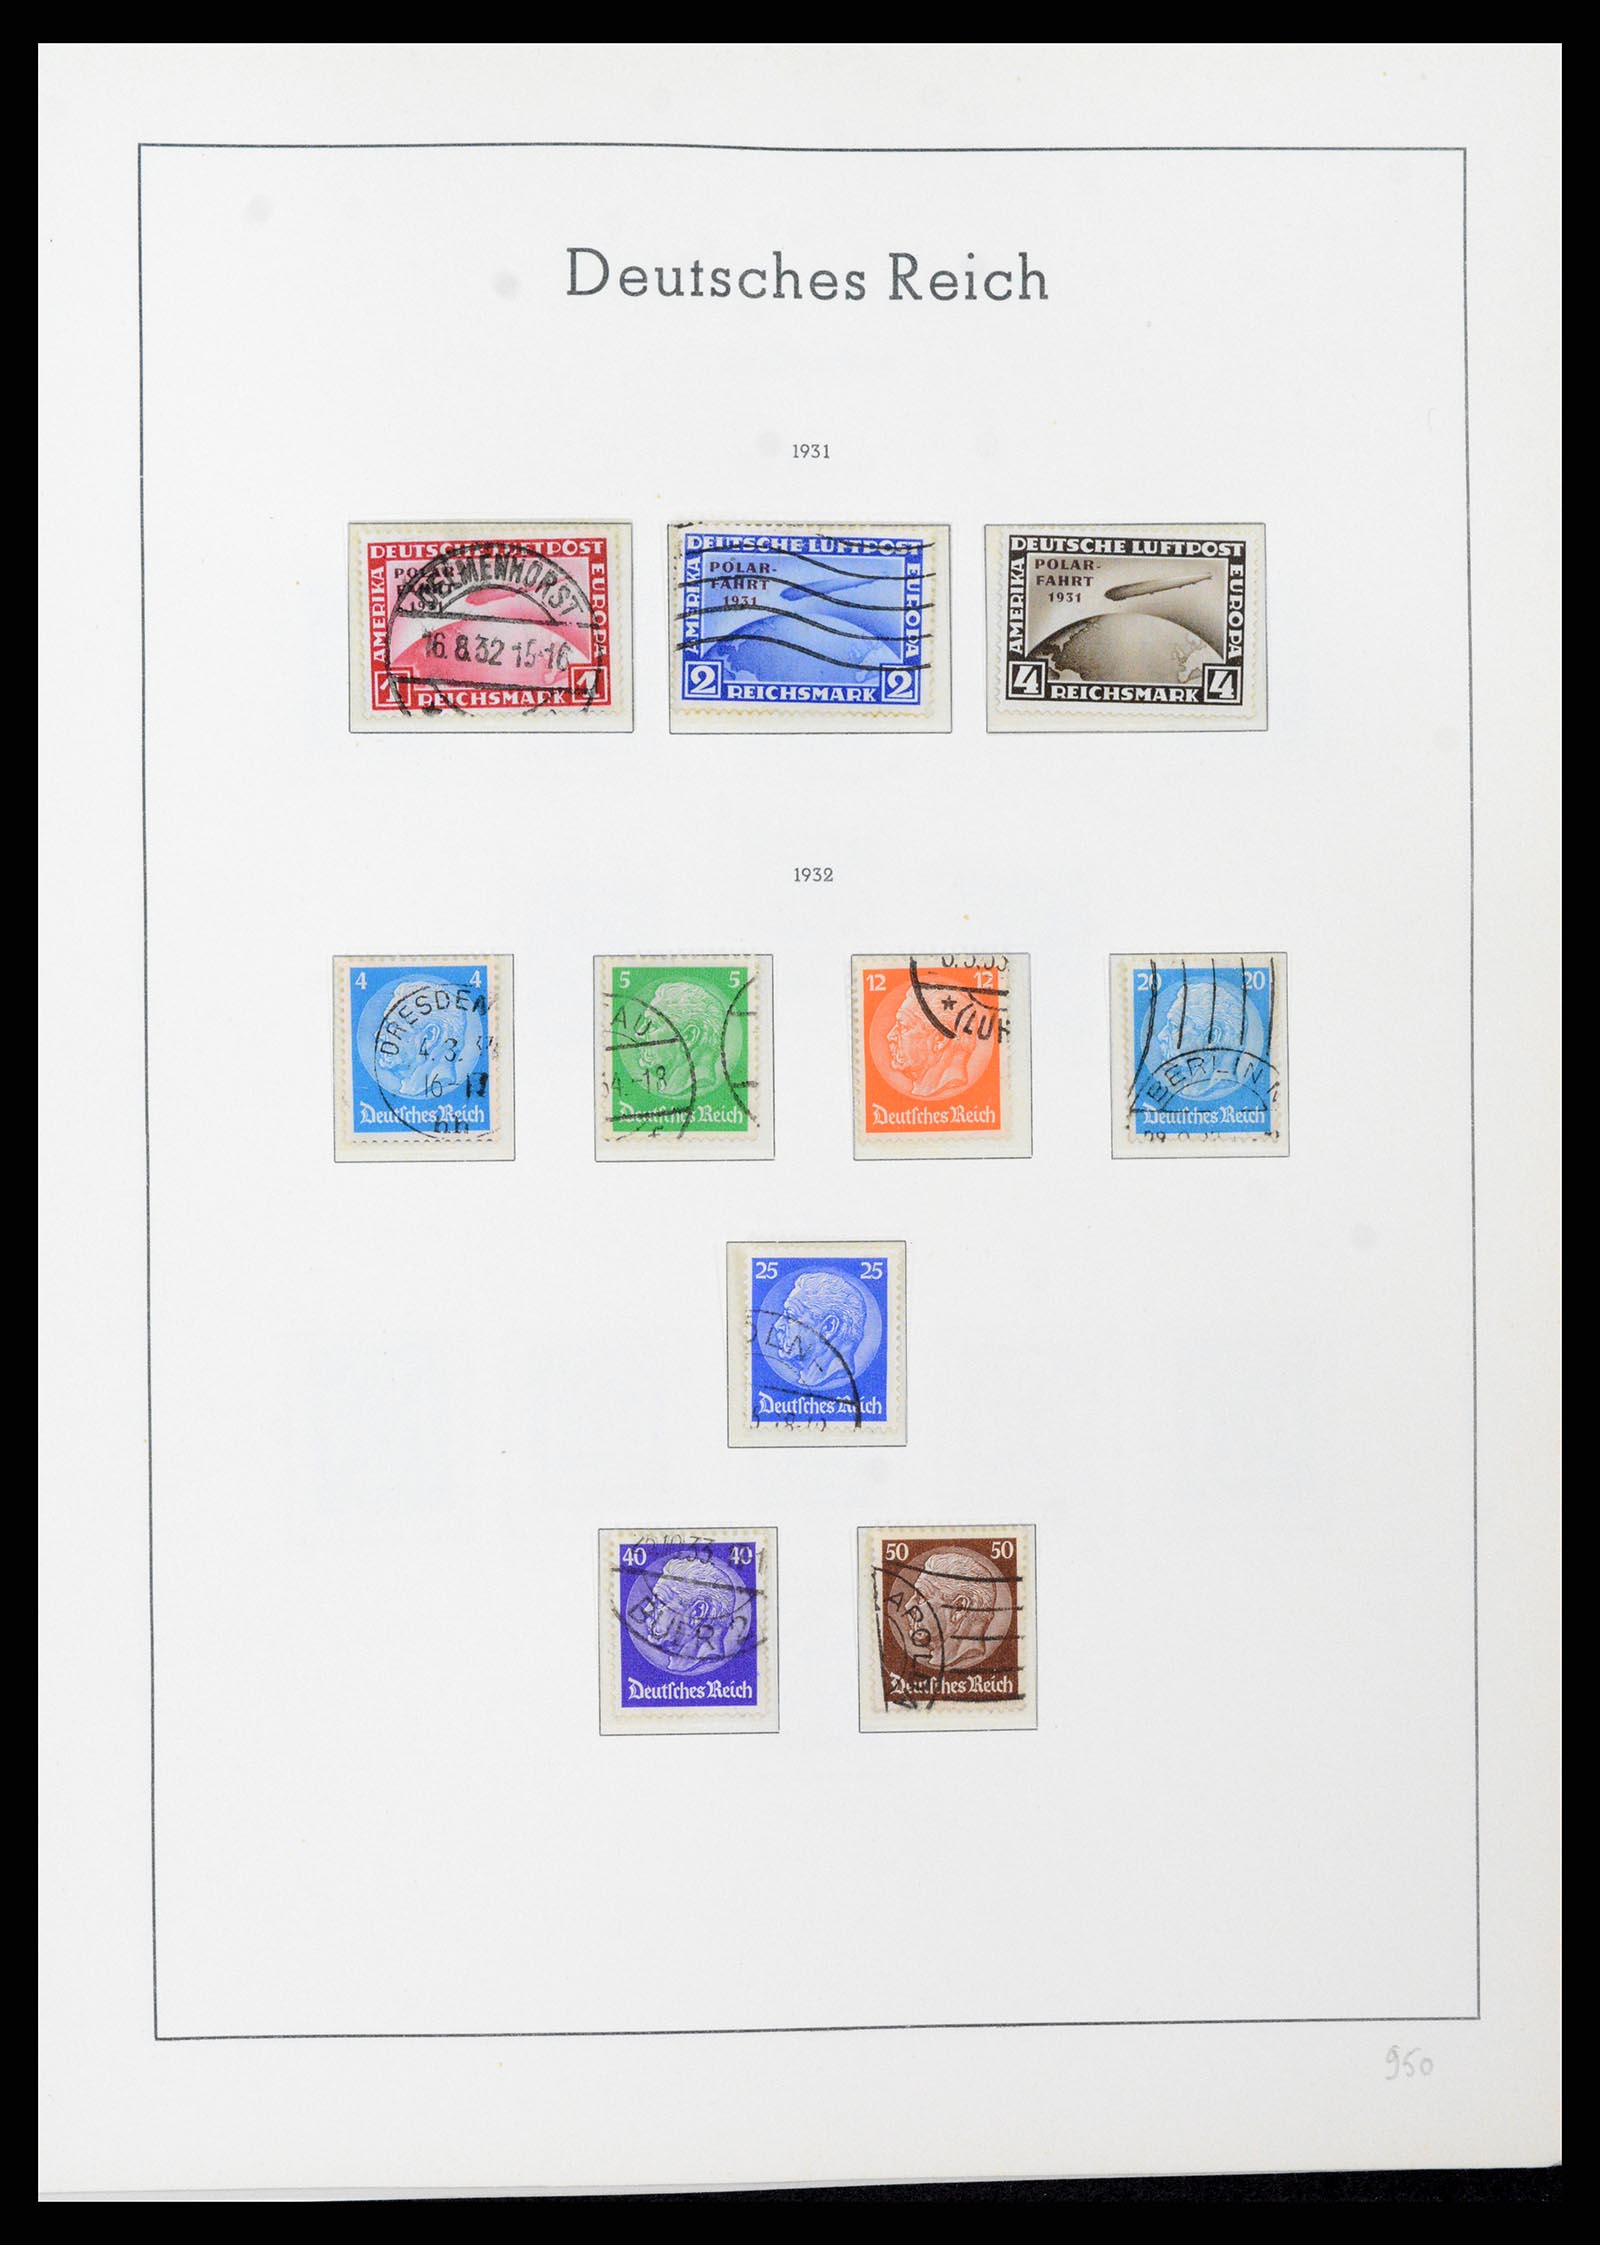 37589 043 - Stamp collection 37589 German Reich 1872-1945.